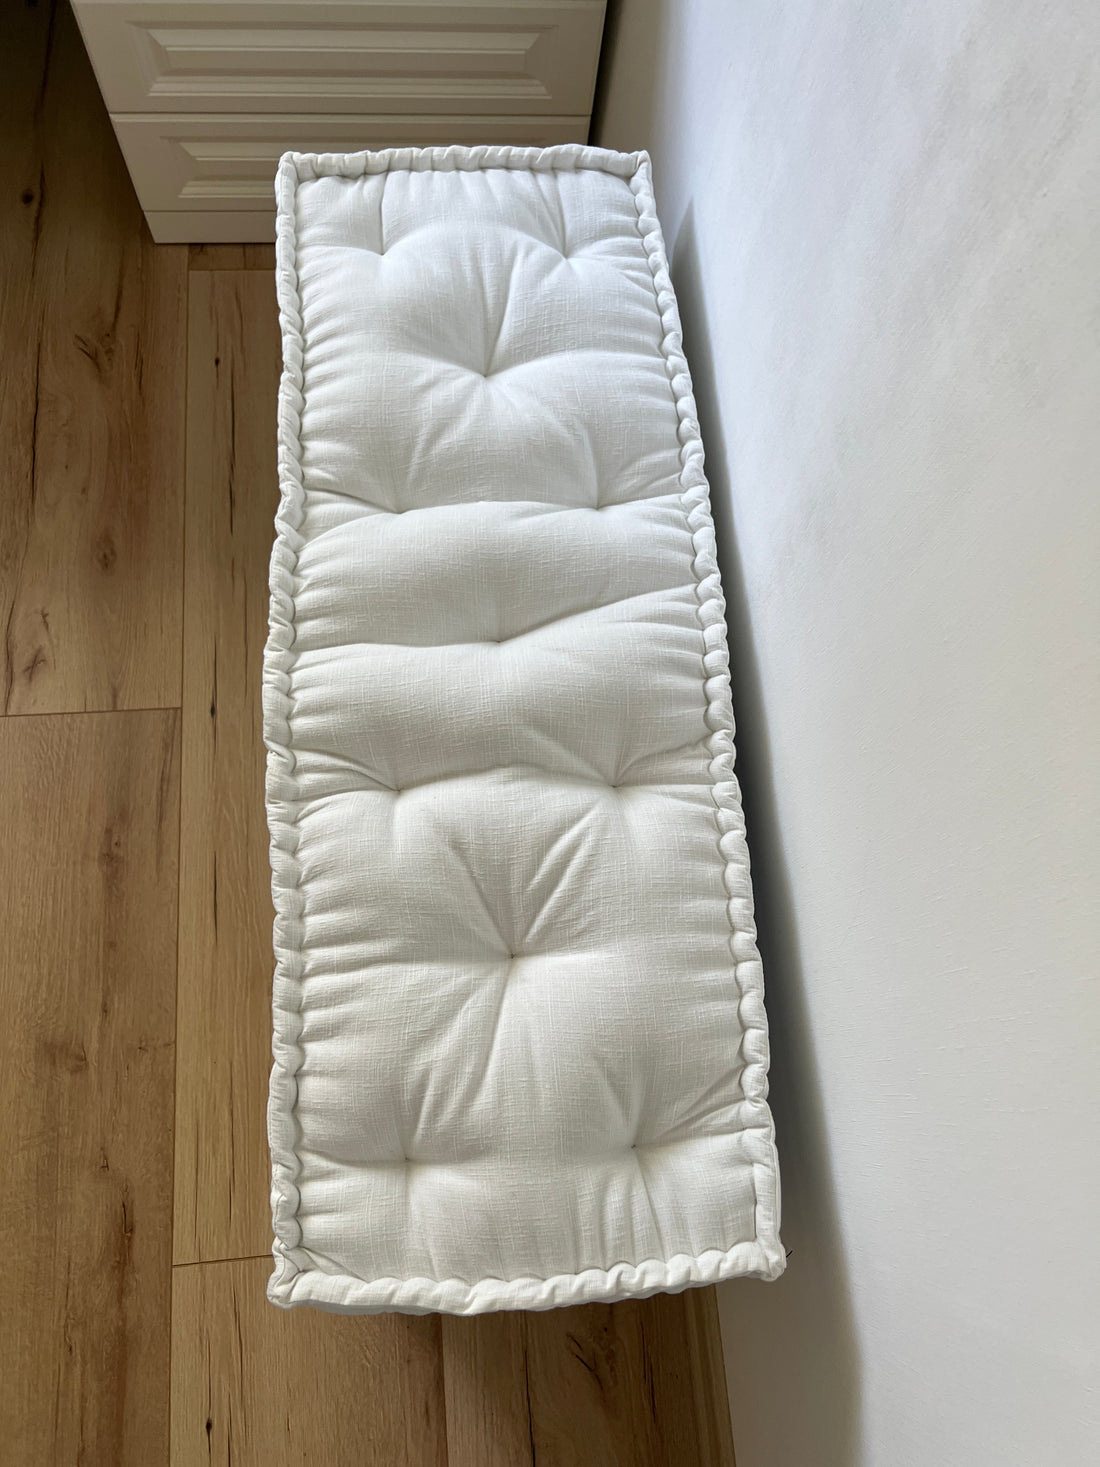 Hemp 14"x37.5" (35х95cm) White Hemp Linen Window Mudroom Floor Bench Cushion filled organic Hemp Fiber filling in Linen Fabric Custom Made